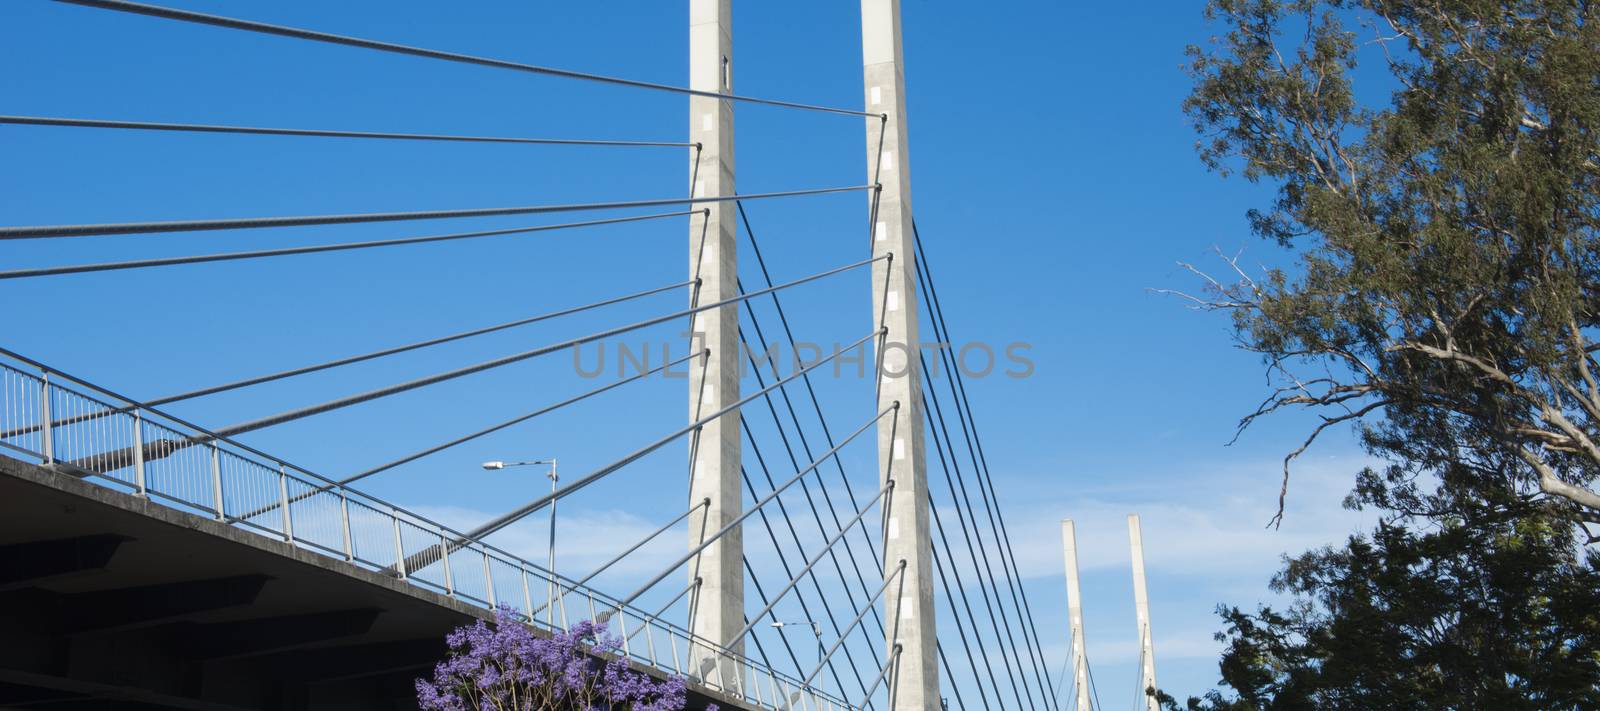 View of the Eleanor Schonell Bridge by artistrobd